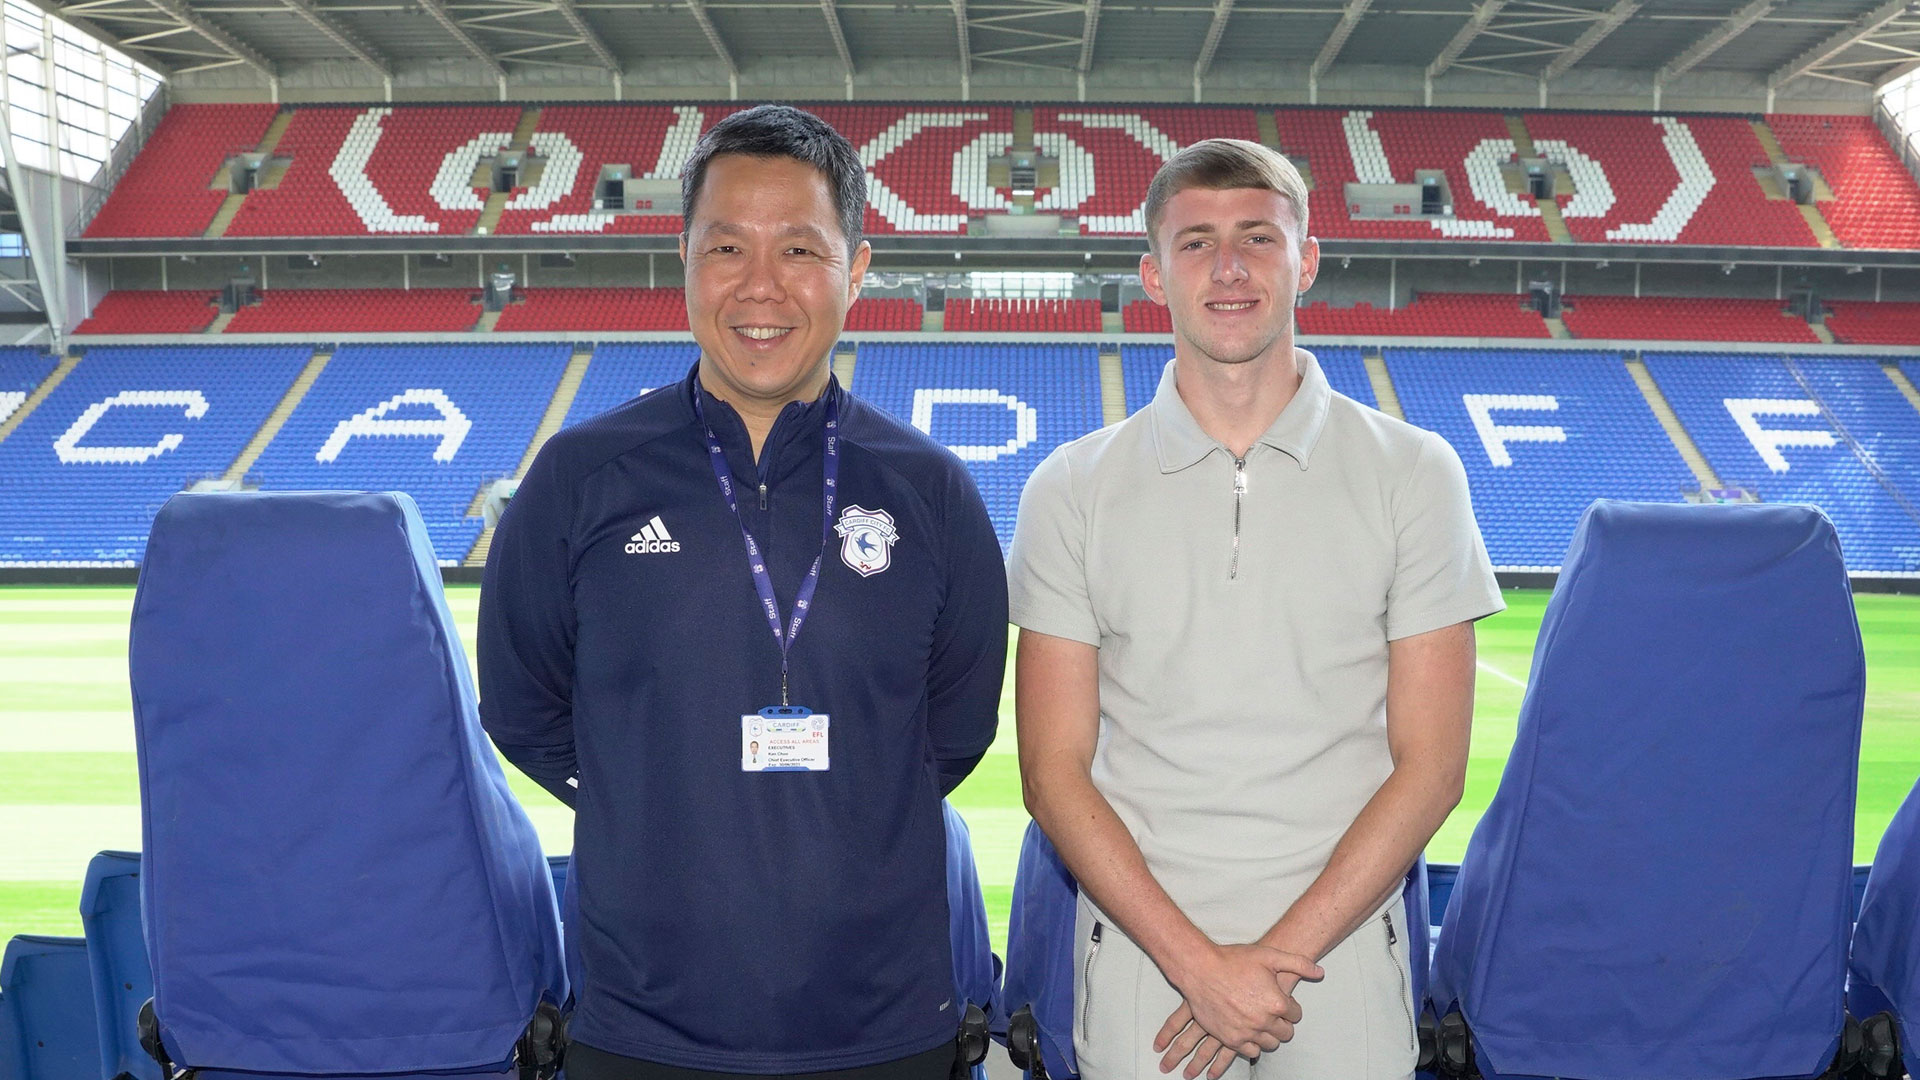 Ryan Kavanagh and Cardiff City CEO & Executive Director Ken Choo